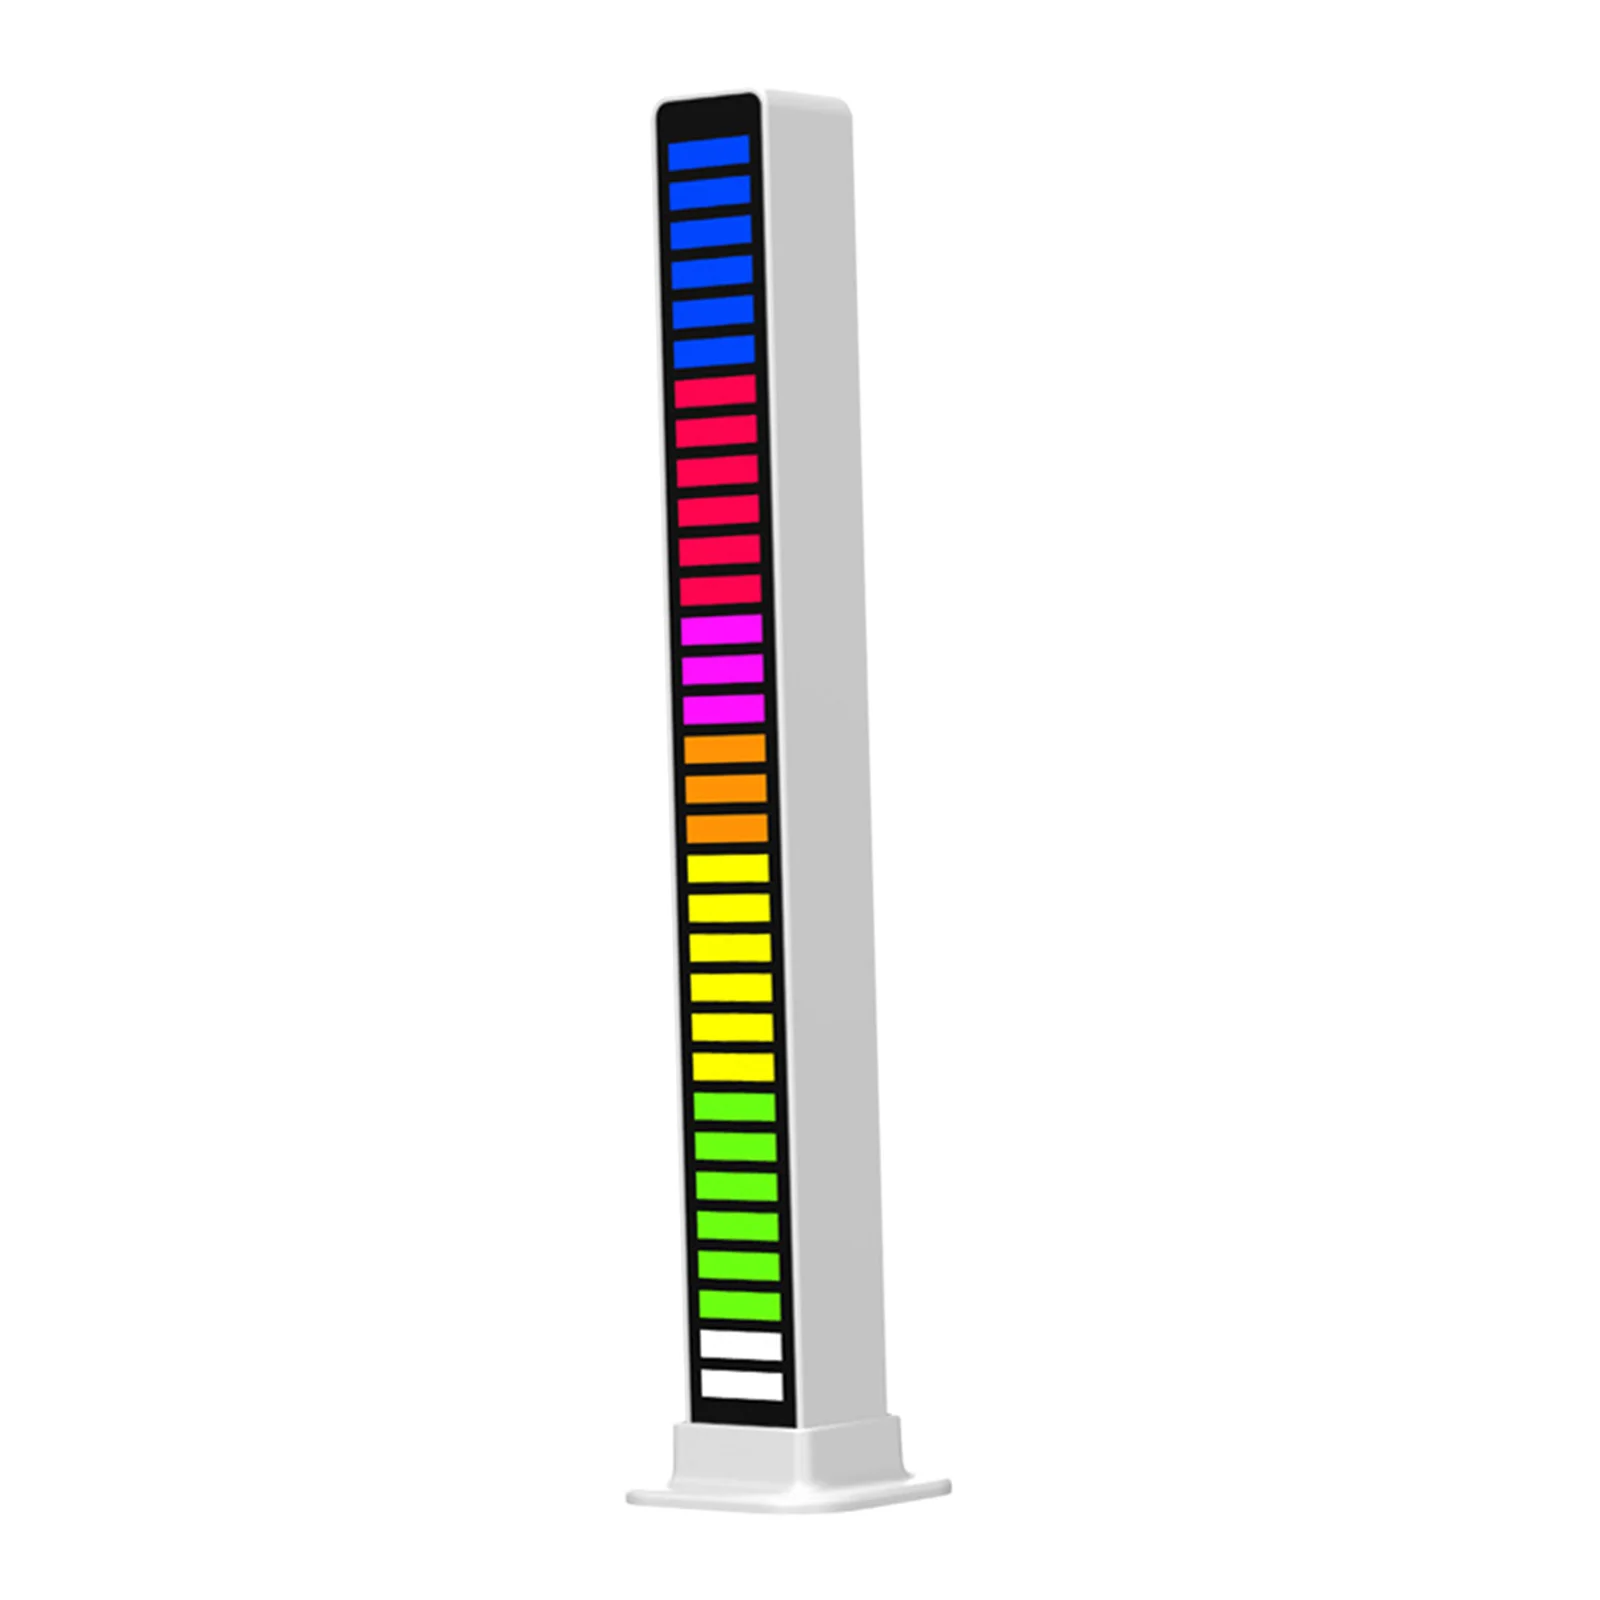 RGB Music Sound Control DJ LED Level Light Bar Novelty Rhythm Lamp PC Desktop Backlight Car Vehicle Atmosphere Light